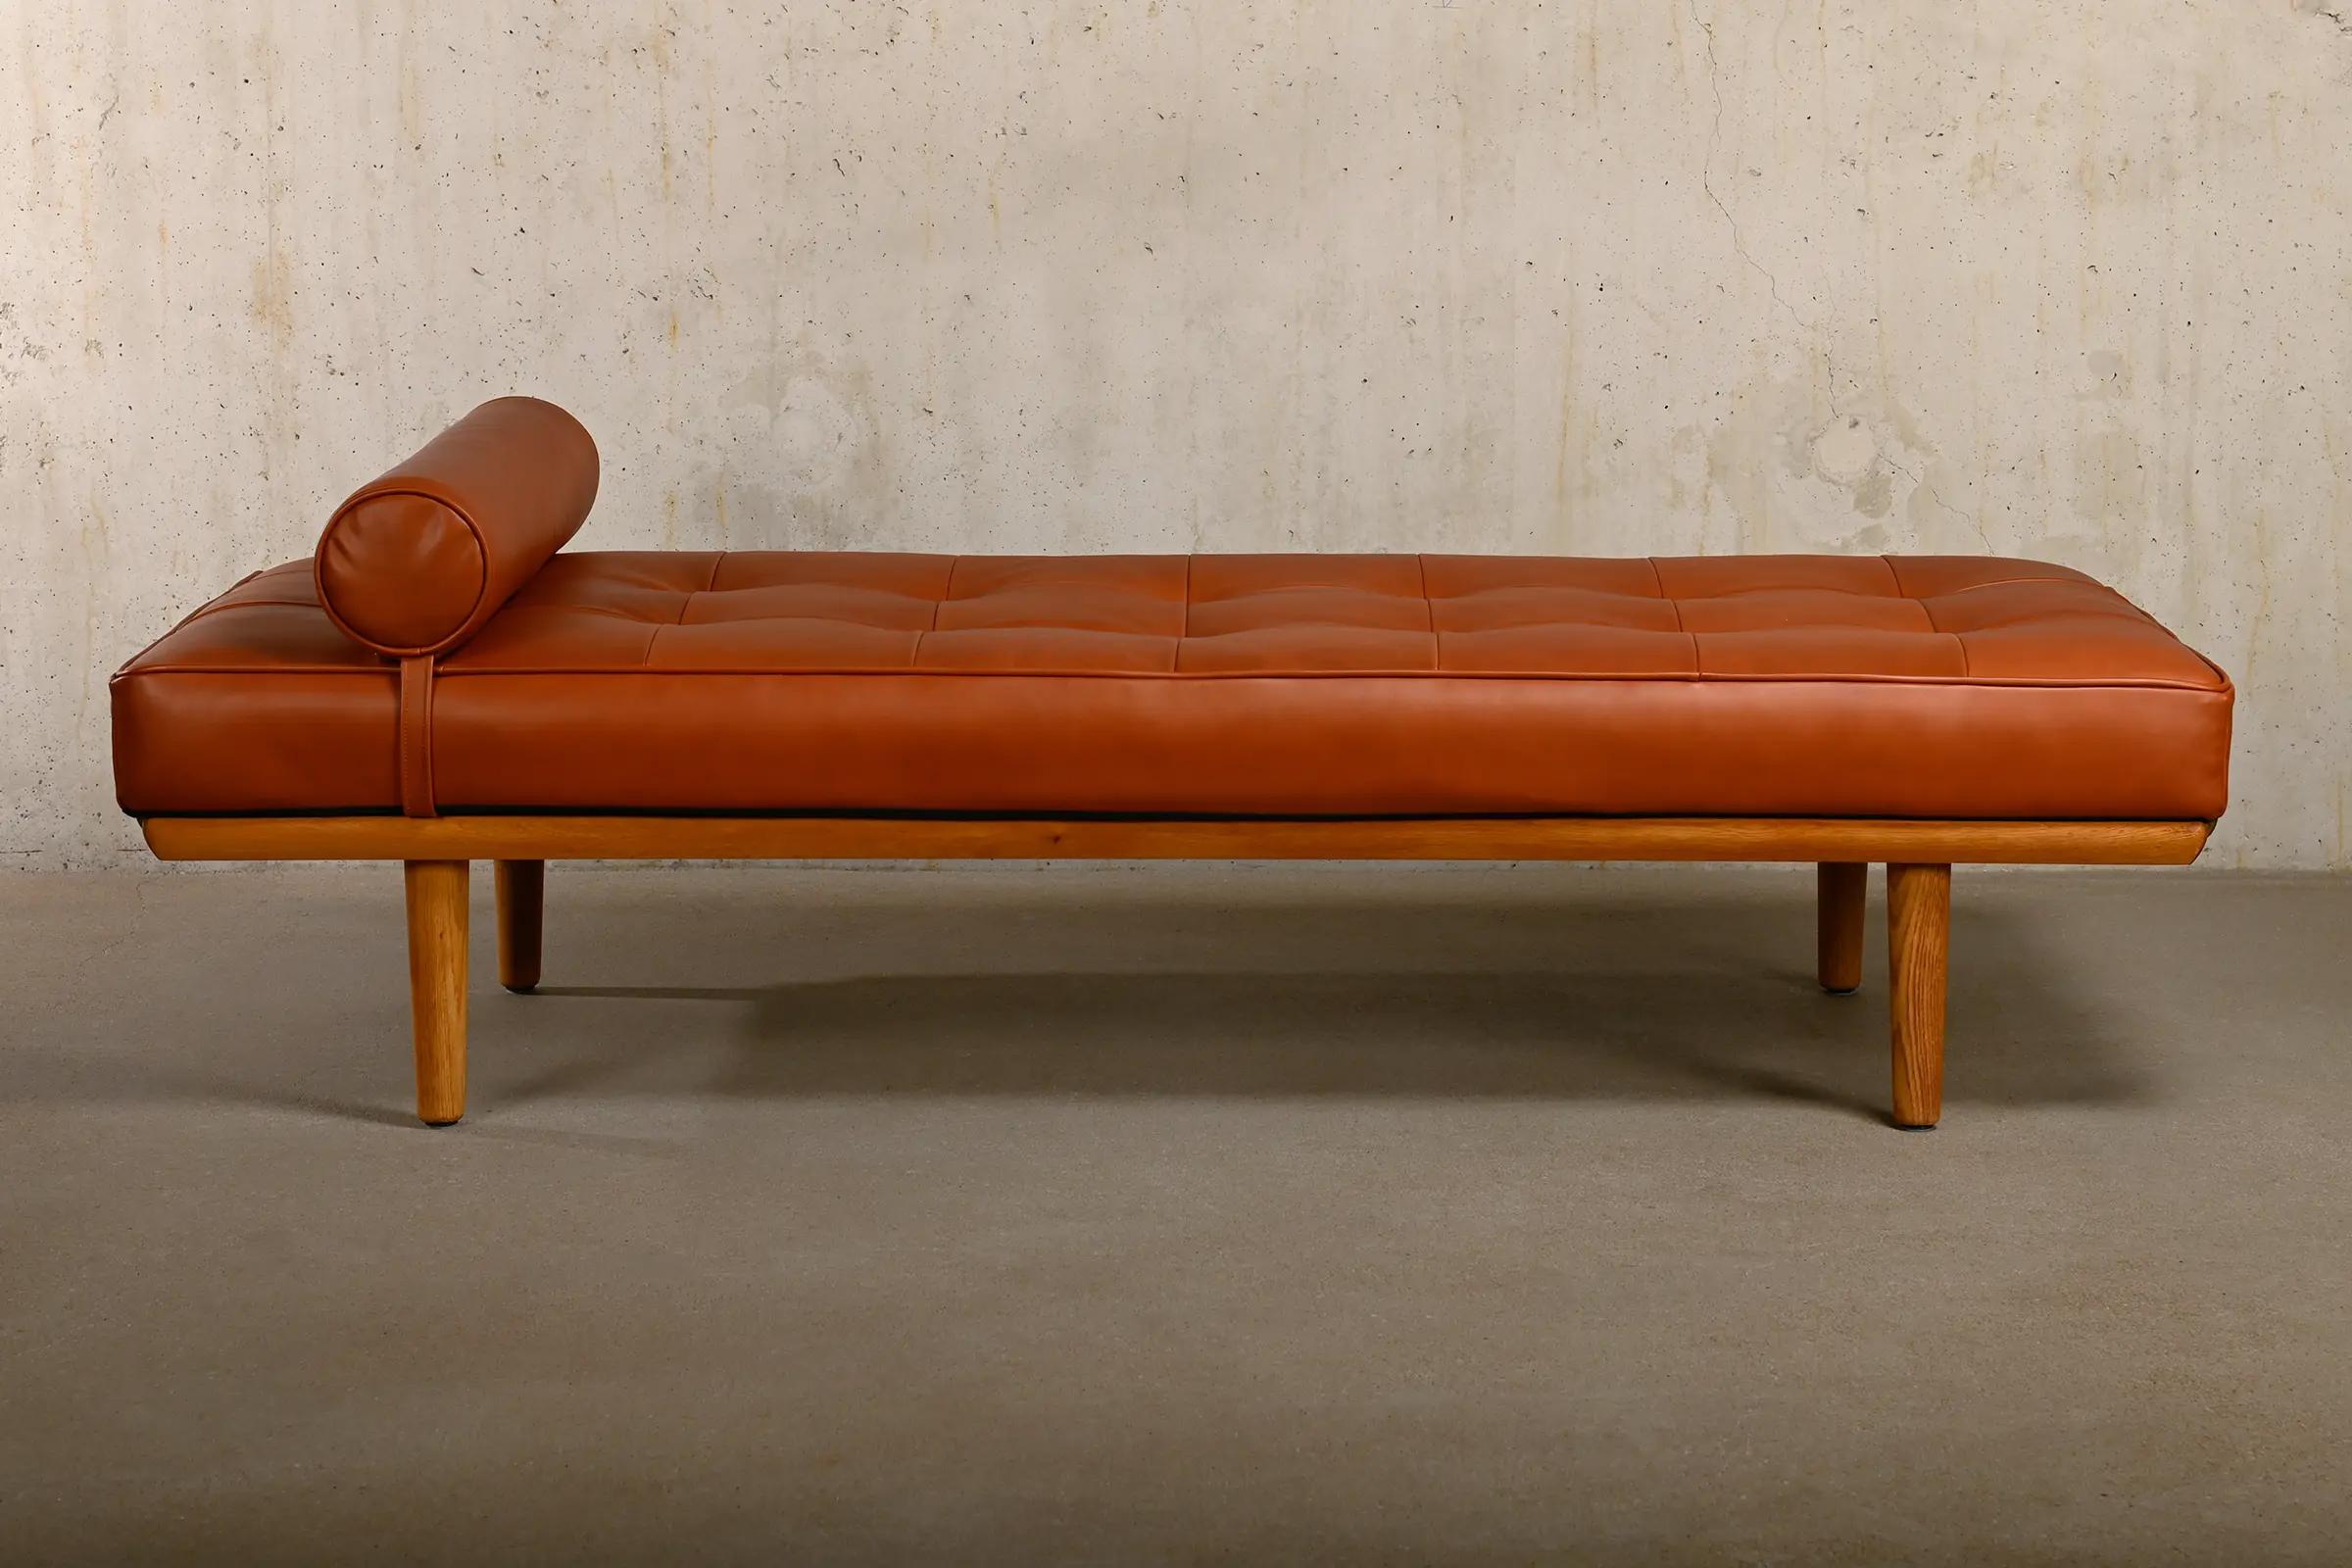 Scandinavian Modern Hans J. Wegner GE19 Daybed with Oak and Cognac Leather for Getama Denmark 1960s